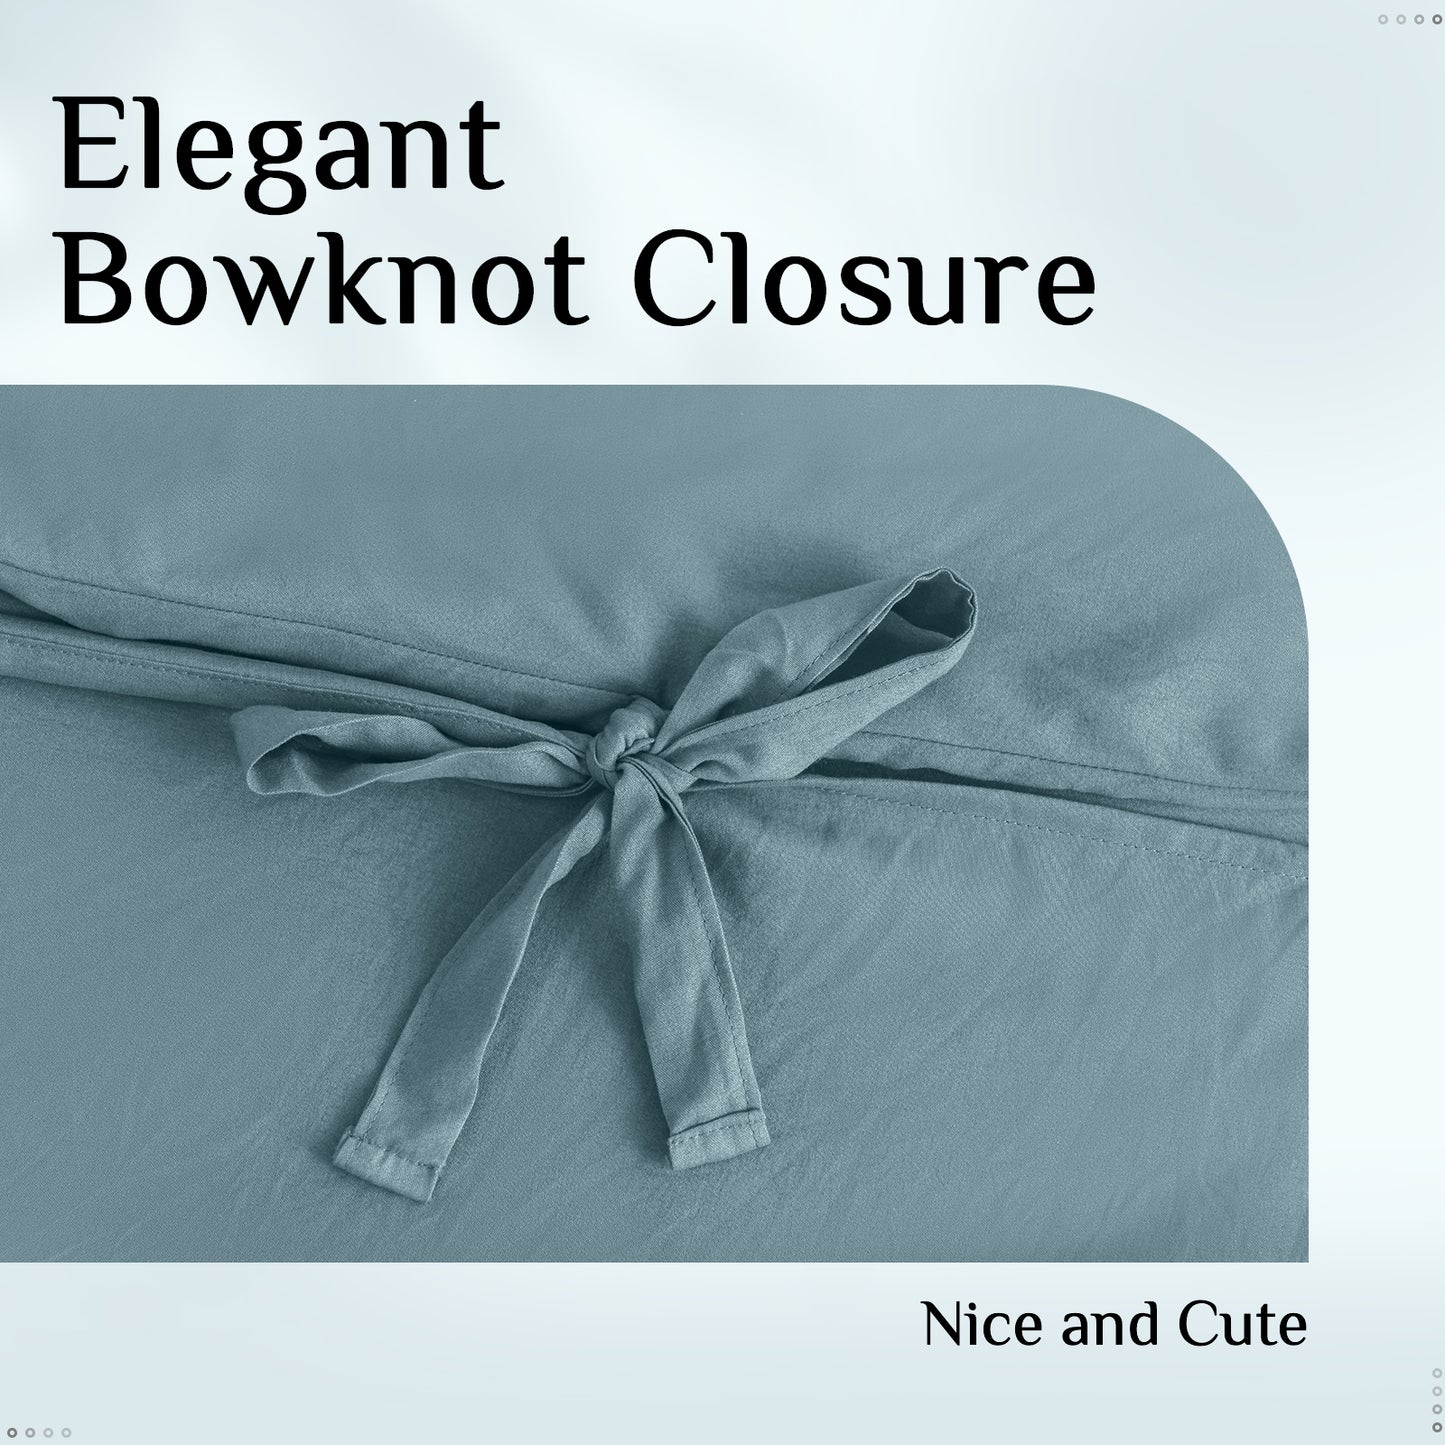 Argstar Bowknot Closure Duvet Cover Set Greyish Blue Color